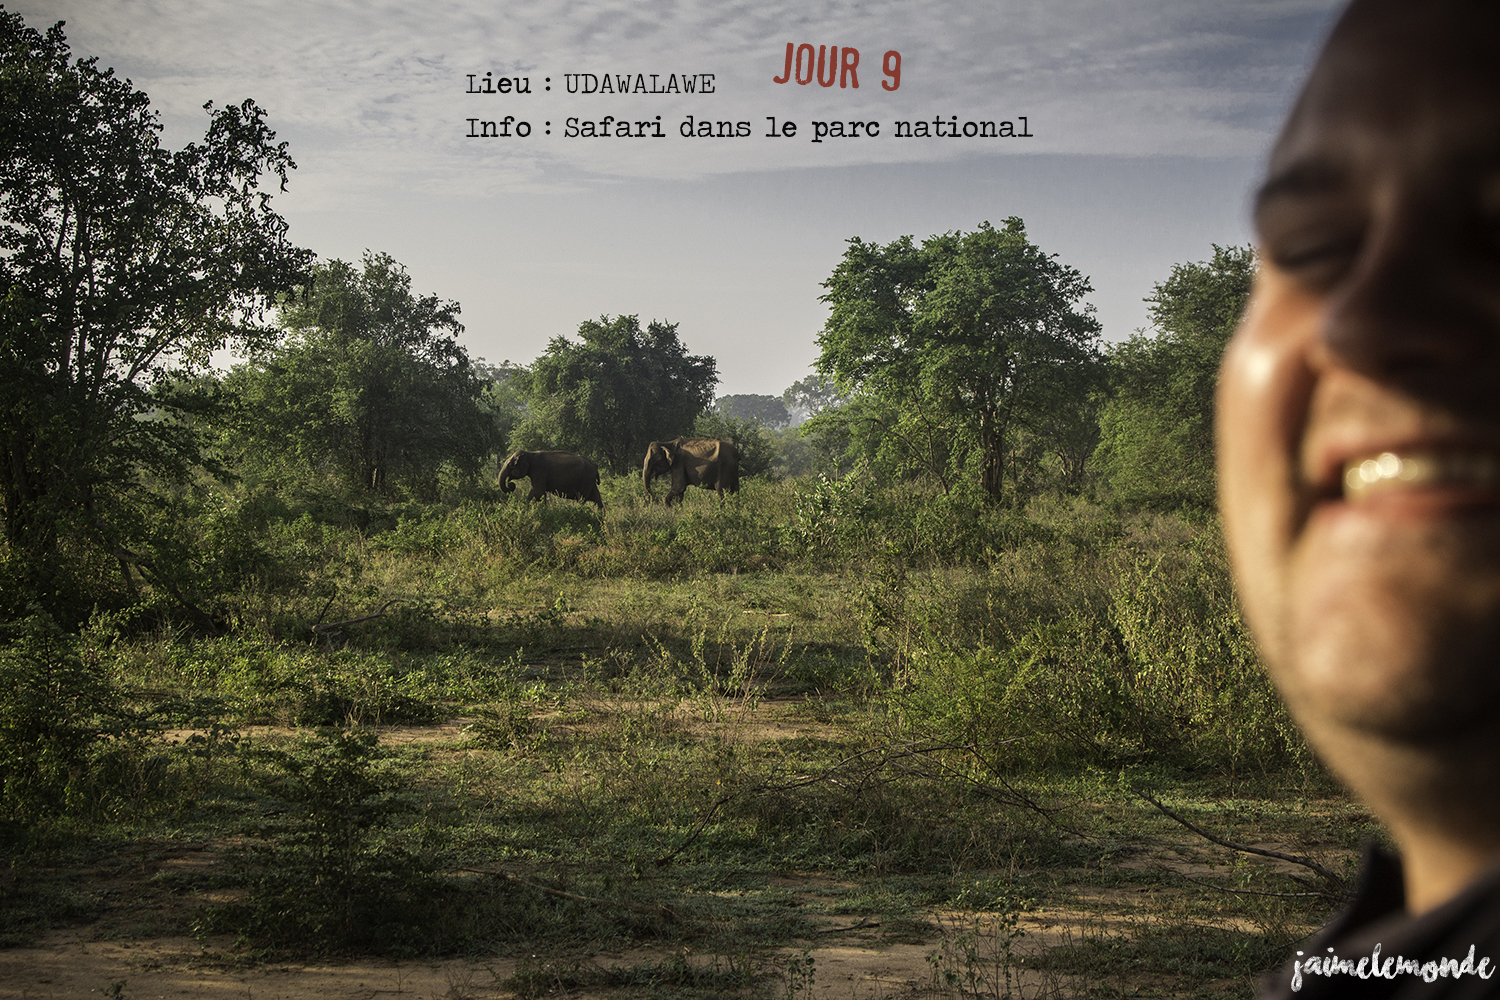 Voyage Sri Lanka - Itinéraire Jour 9 - 5 Udawalawe - Safari dans le parc national - ©jaimelemonde